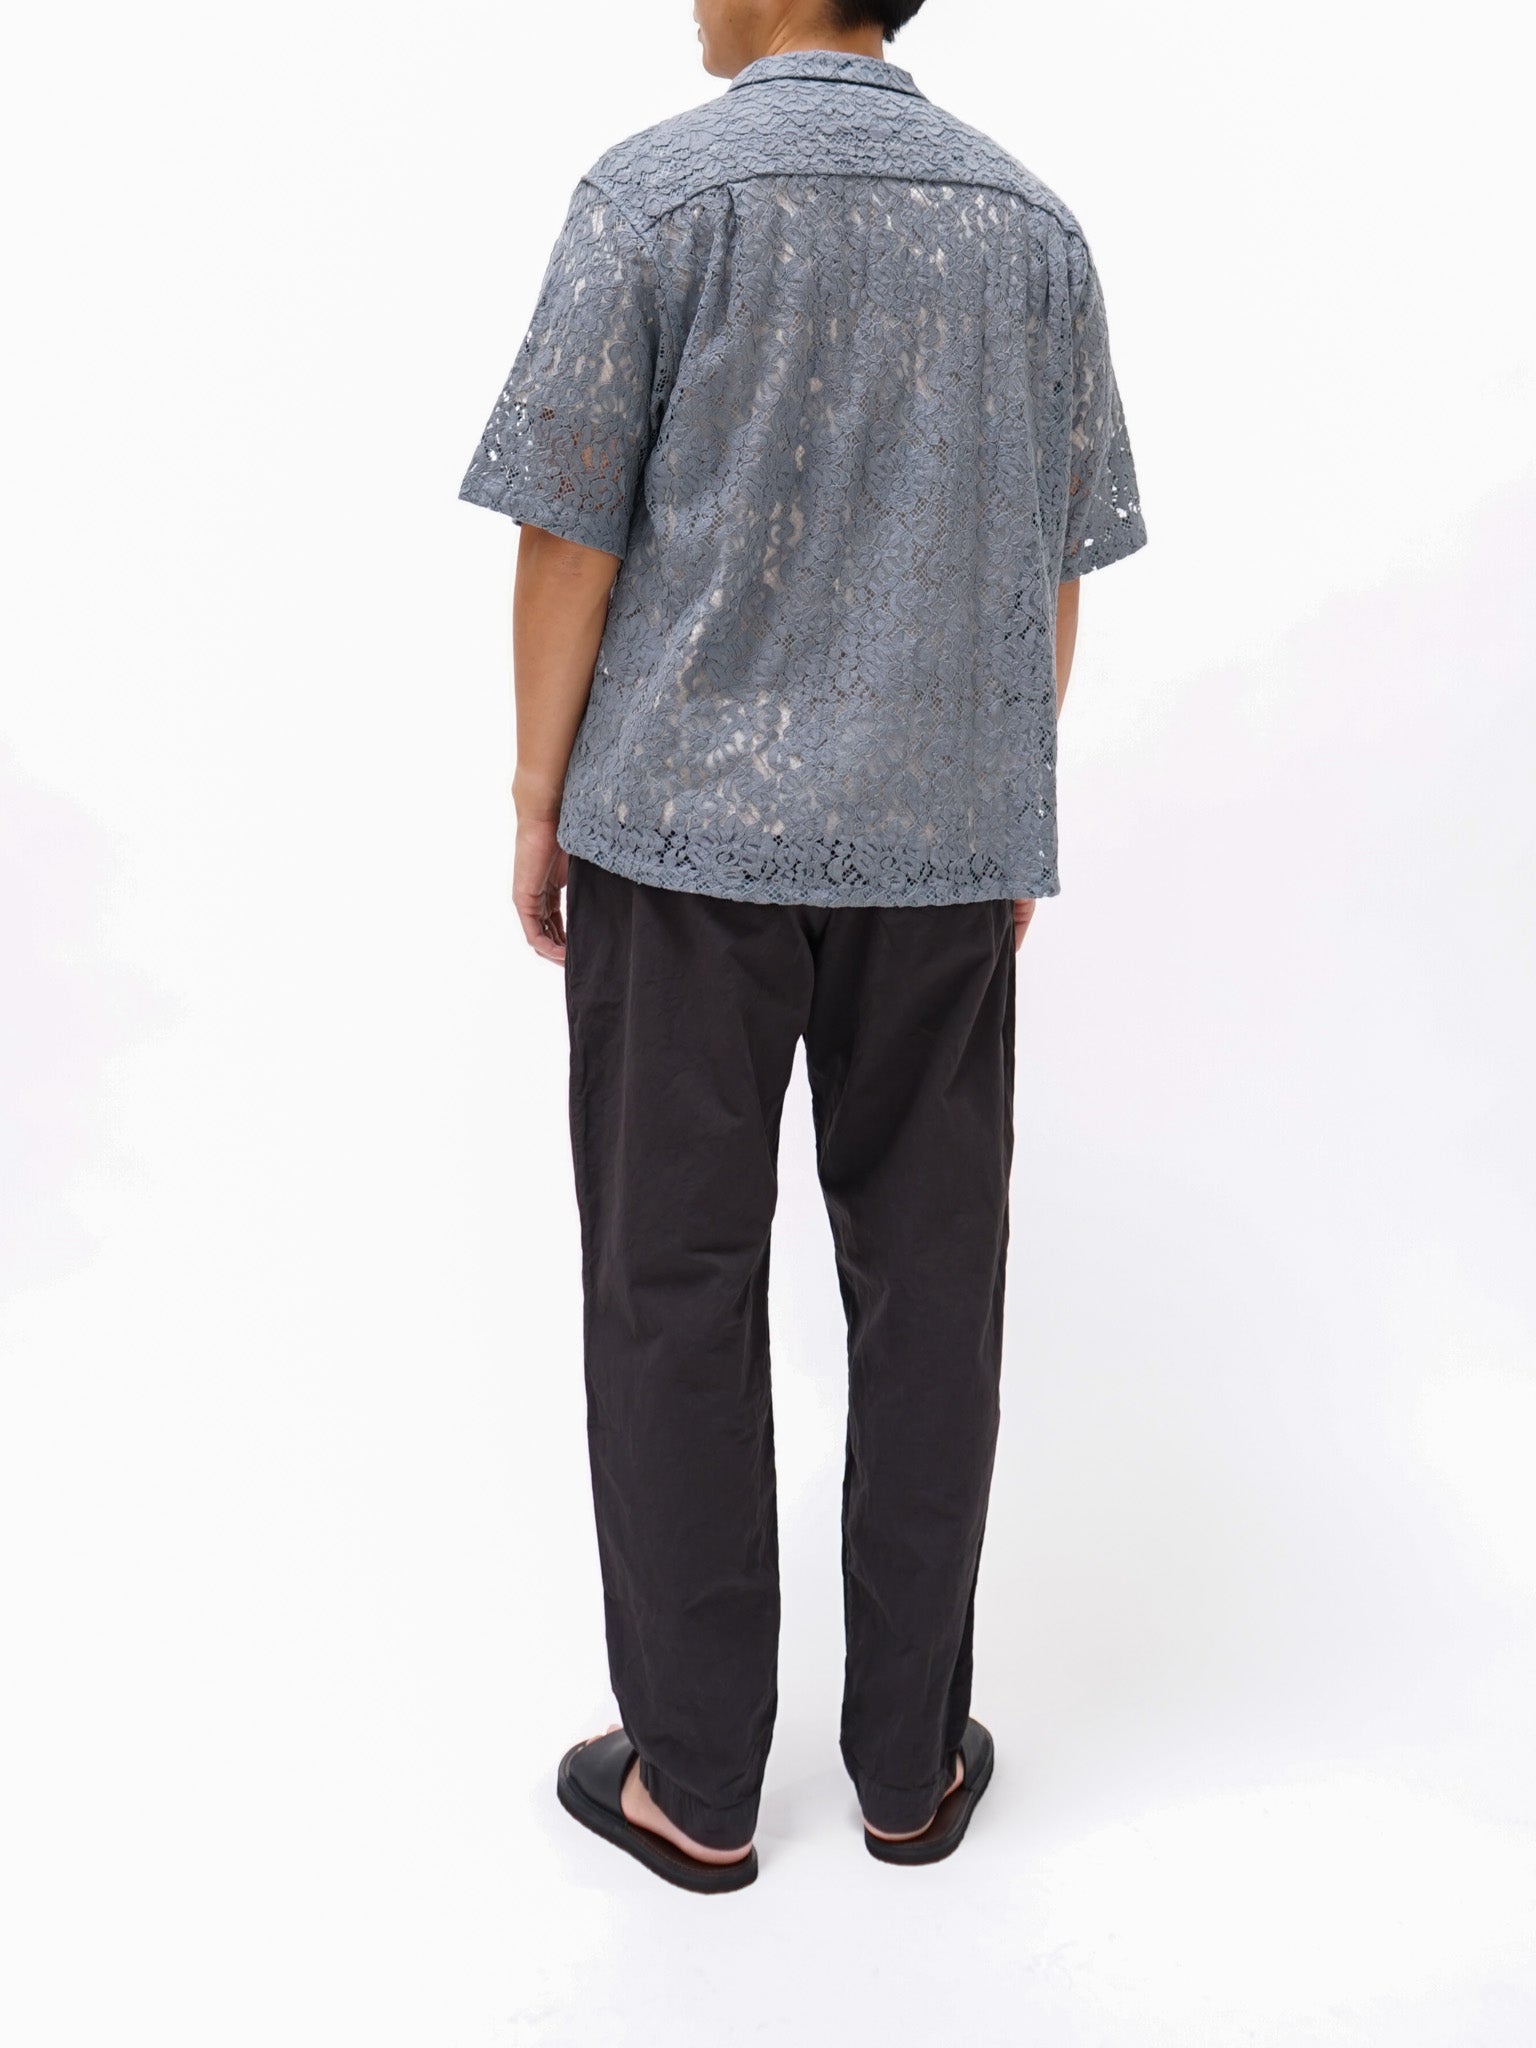 Namu Shop - Niche Open Collar S/S Shirt - Gray Lace Flower